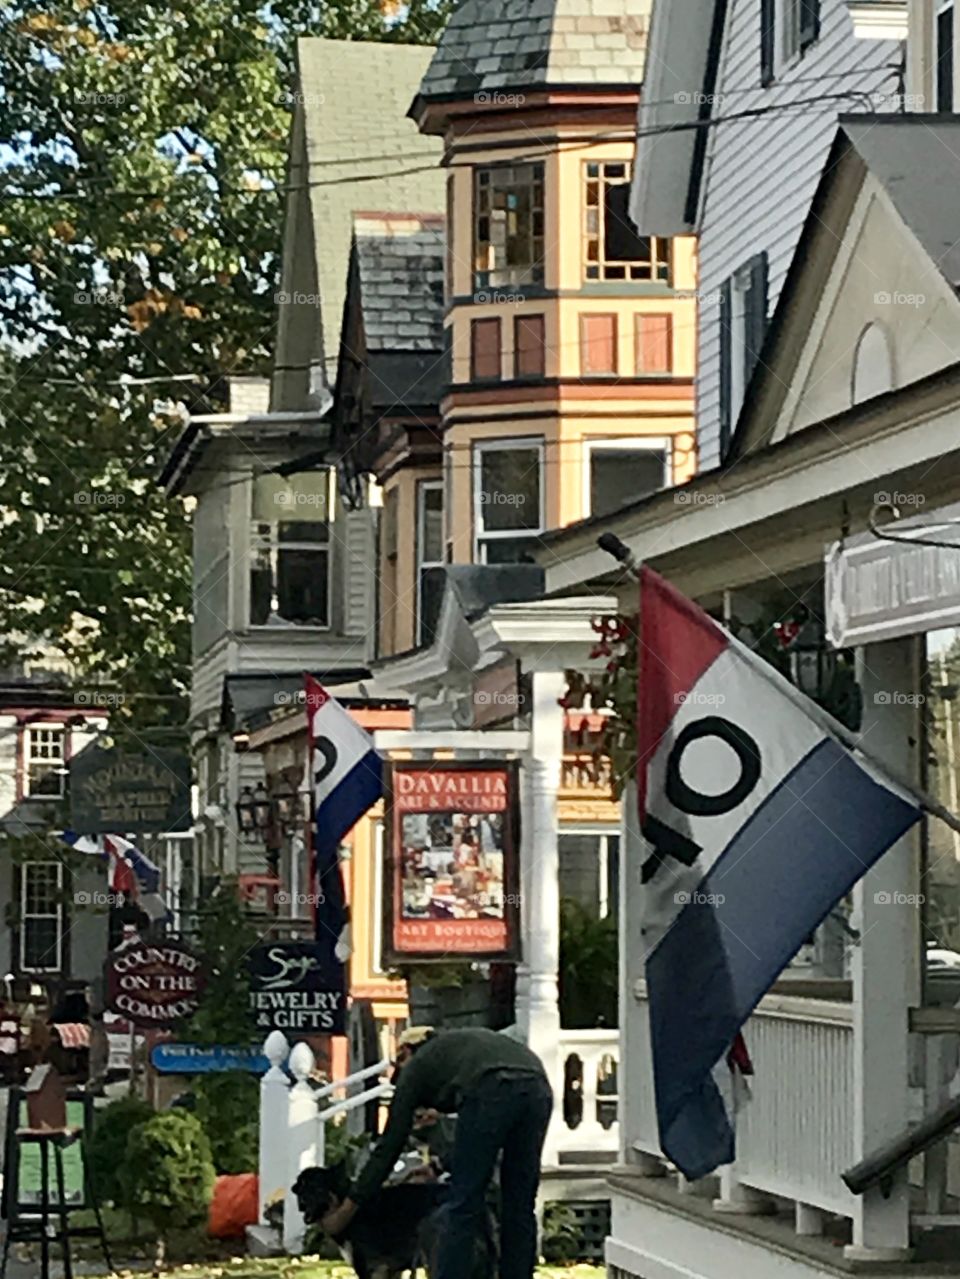 Quaint Main Street in Vermont 